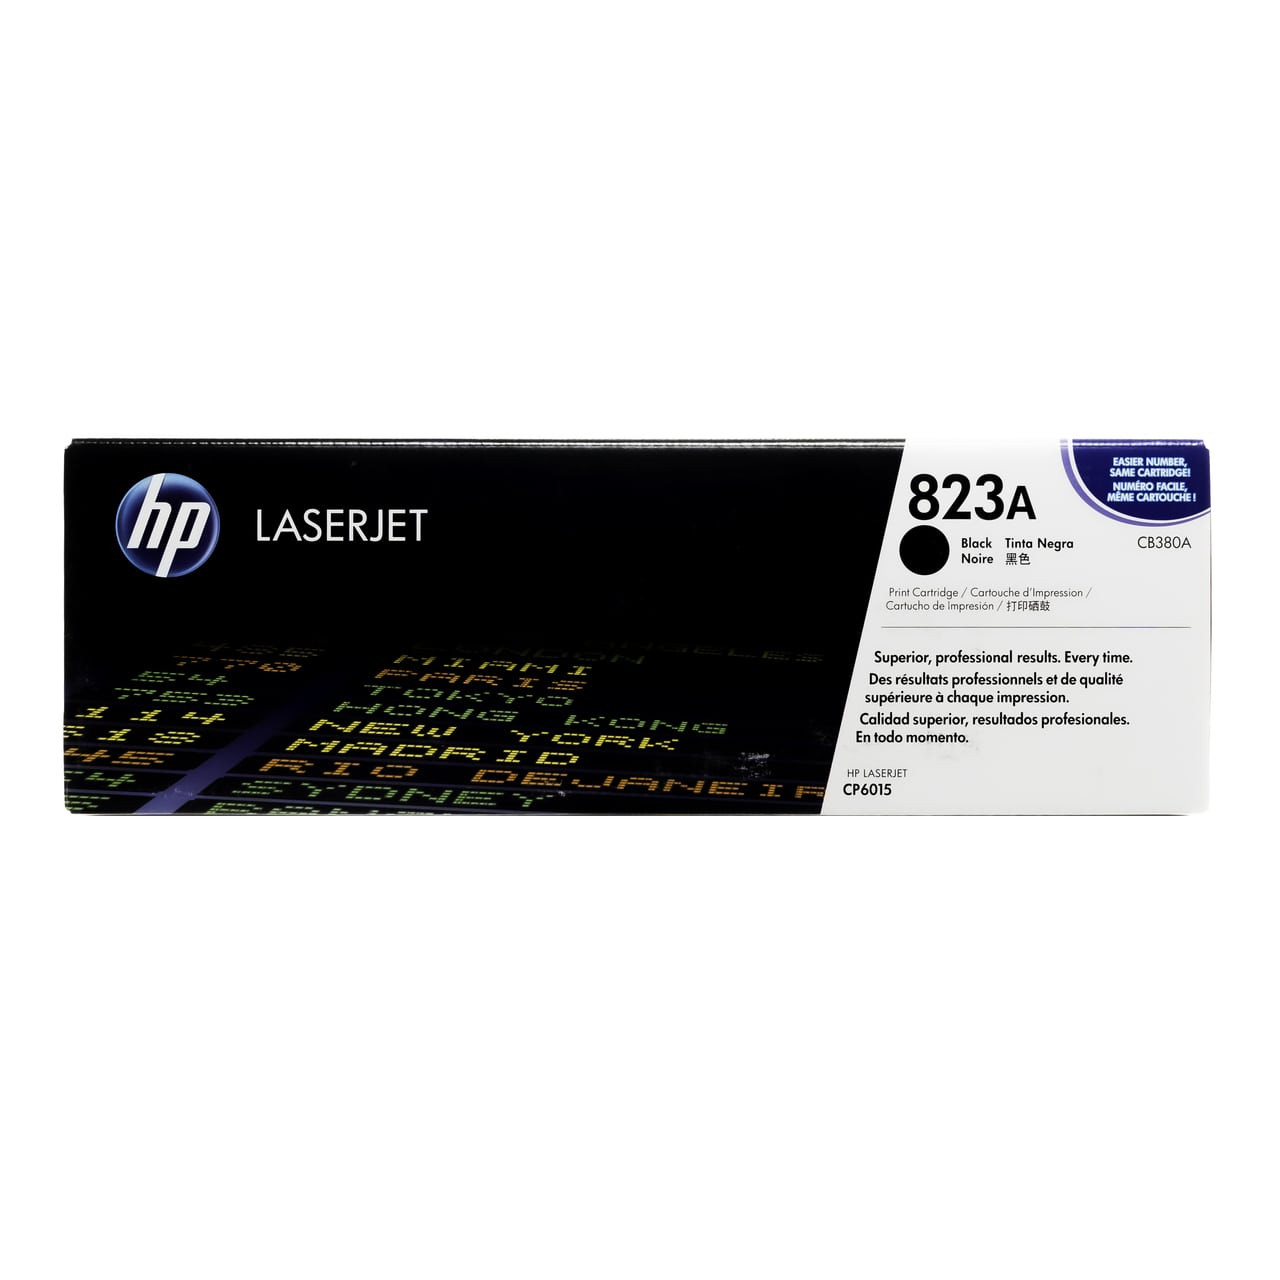 HP 823A Black Original LaserJet Toner Cartridge